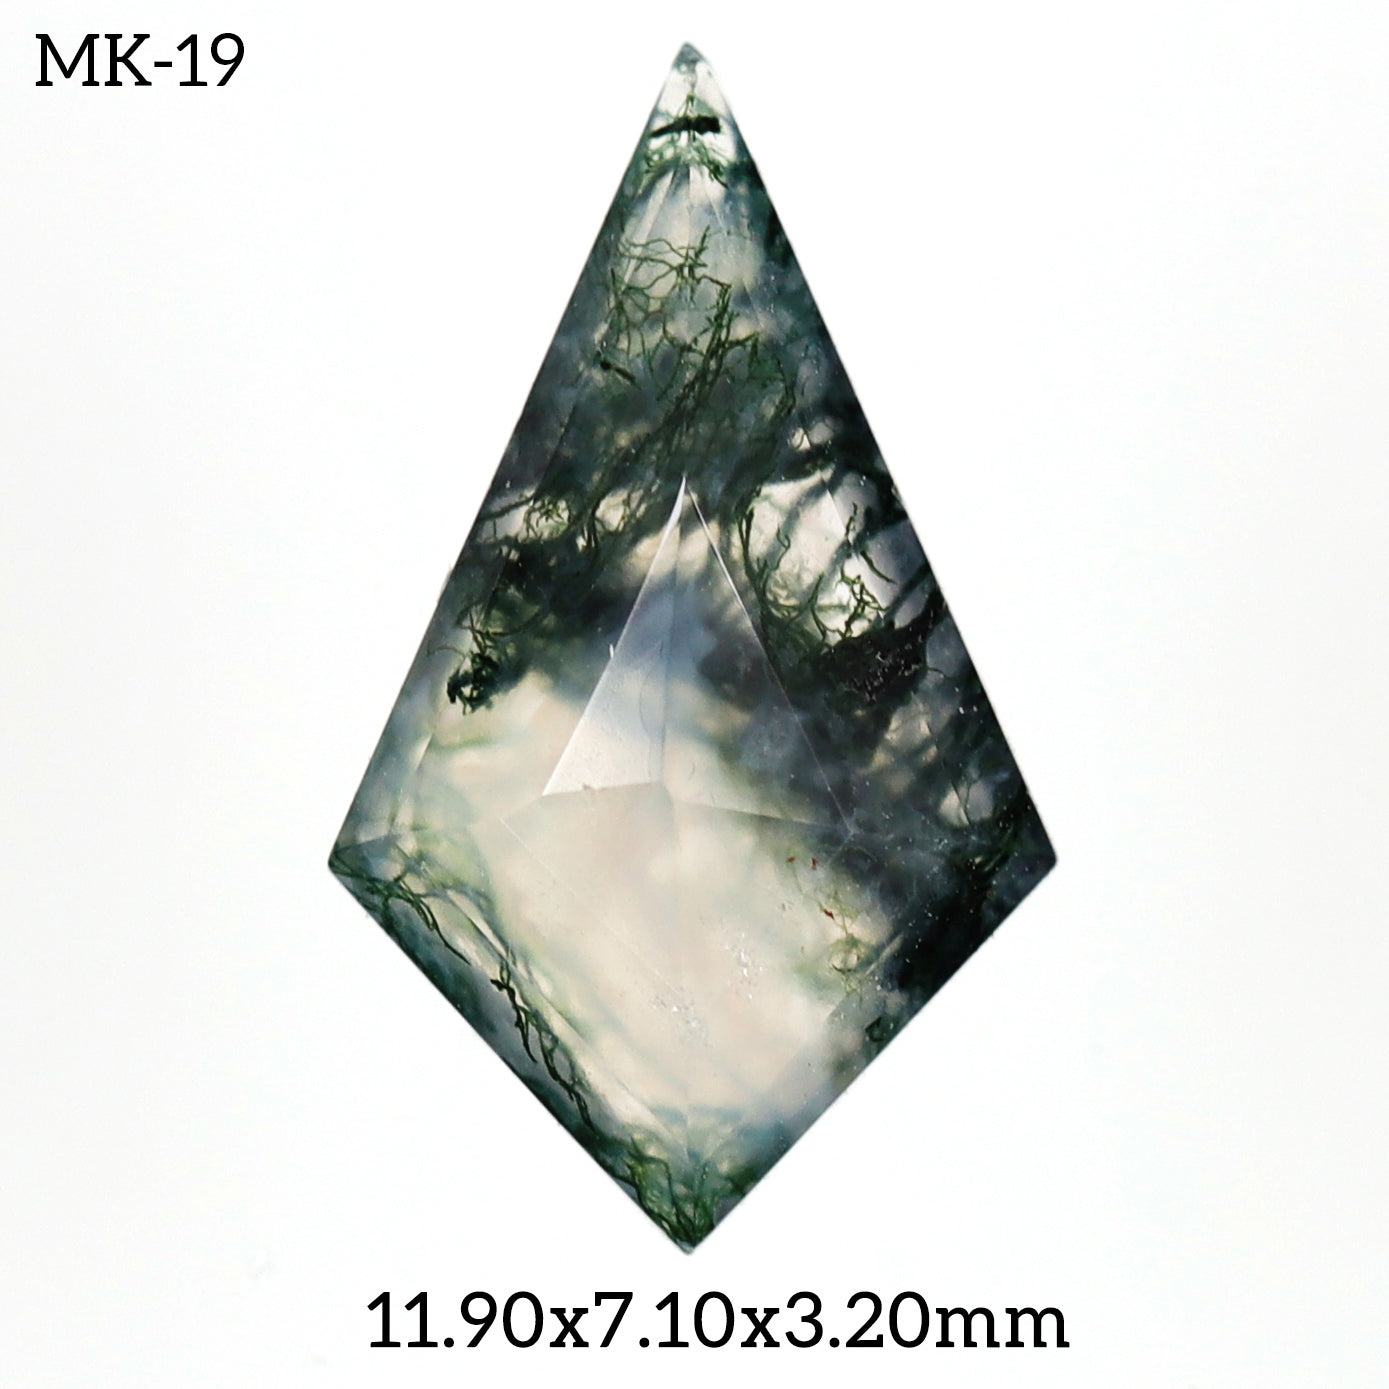 MK - 19 Moss Agate Kite Gemstone